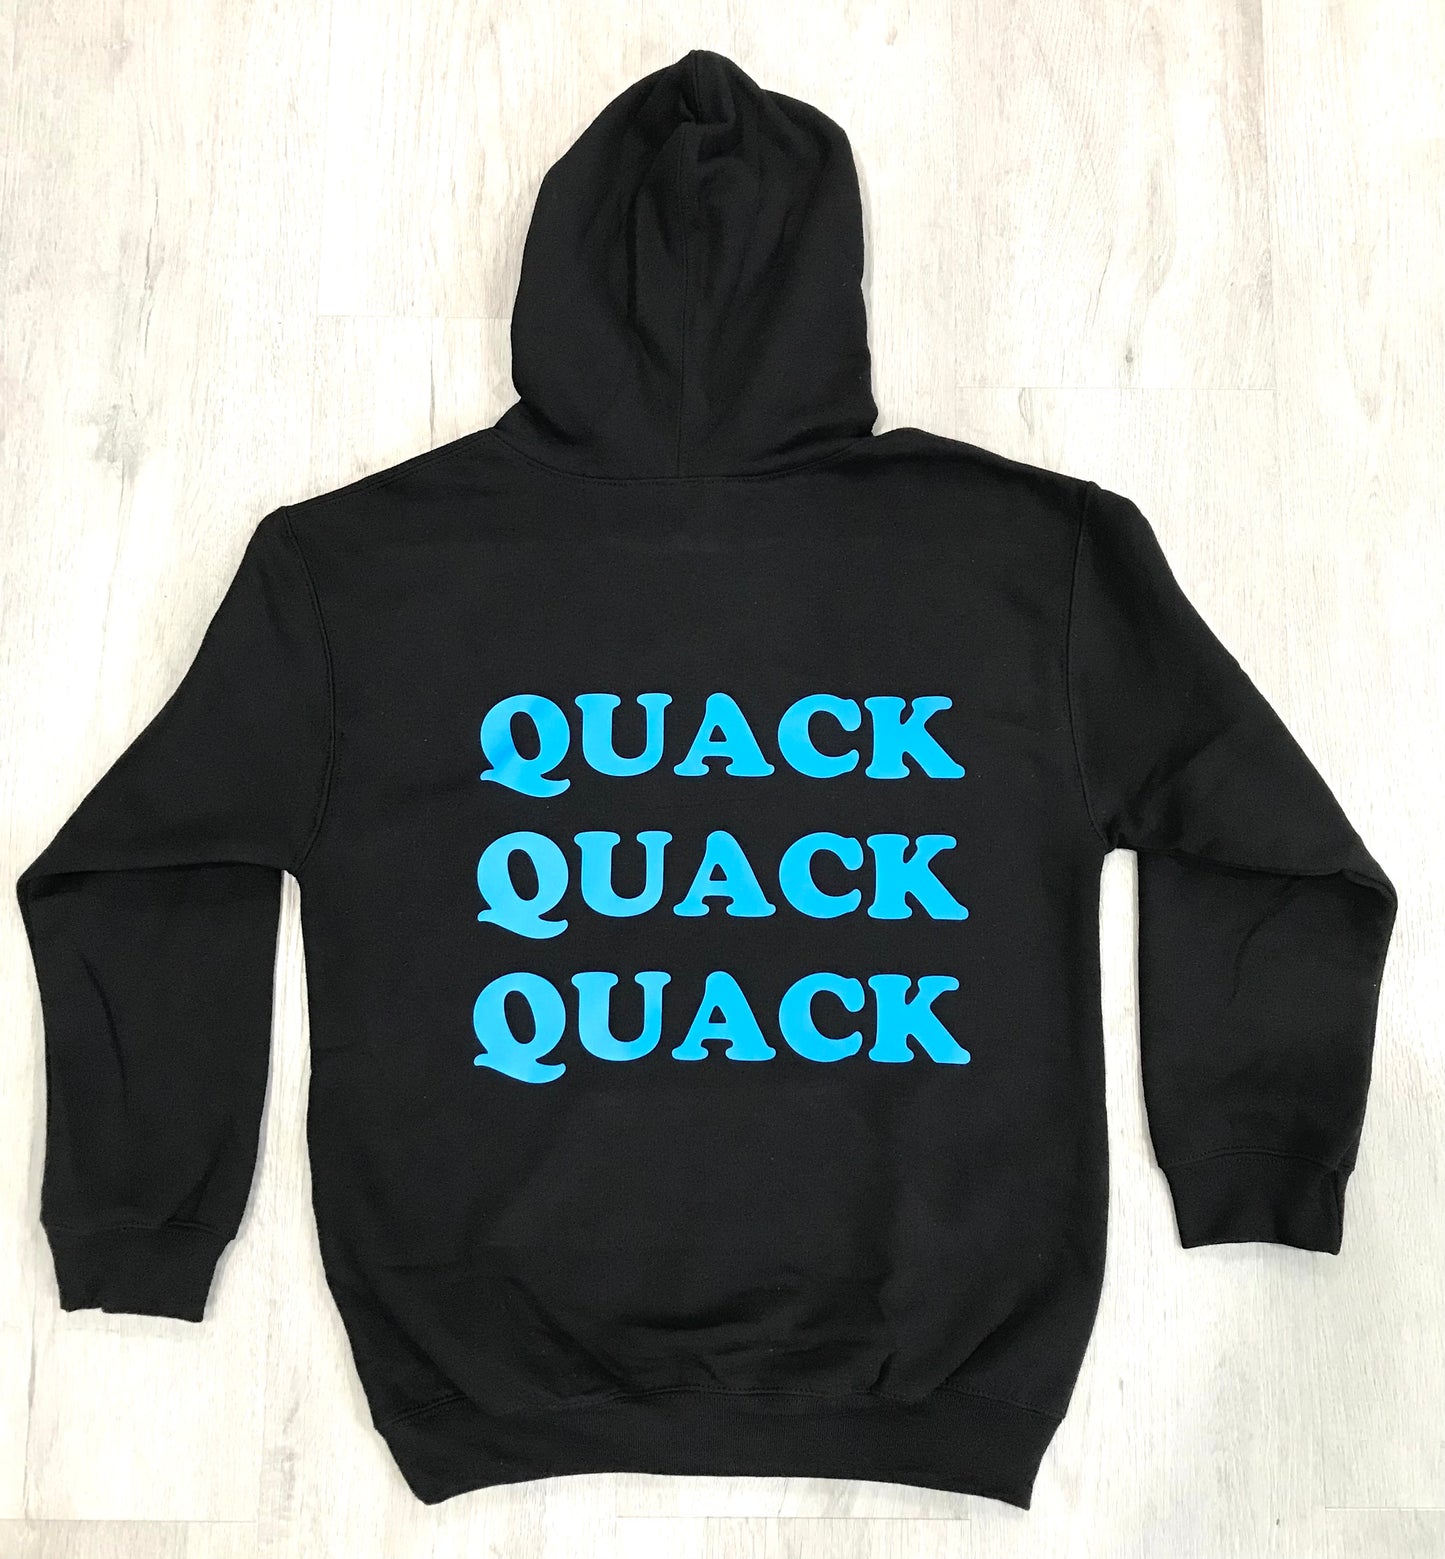 High quality Hoodies Dufferin Ducks - Quack